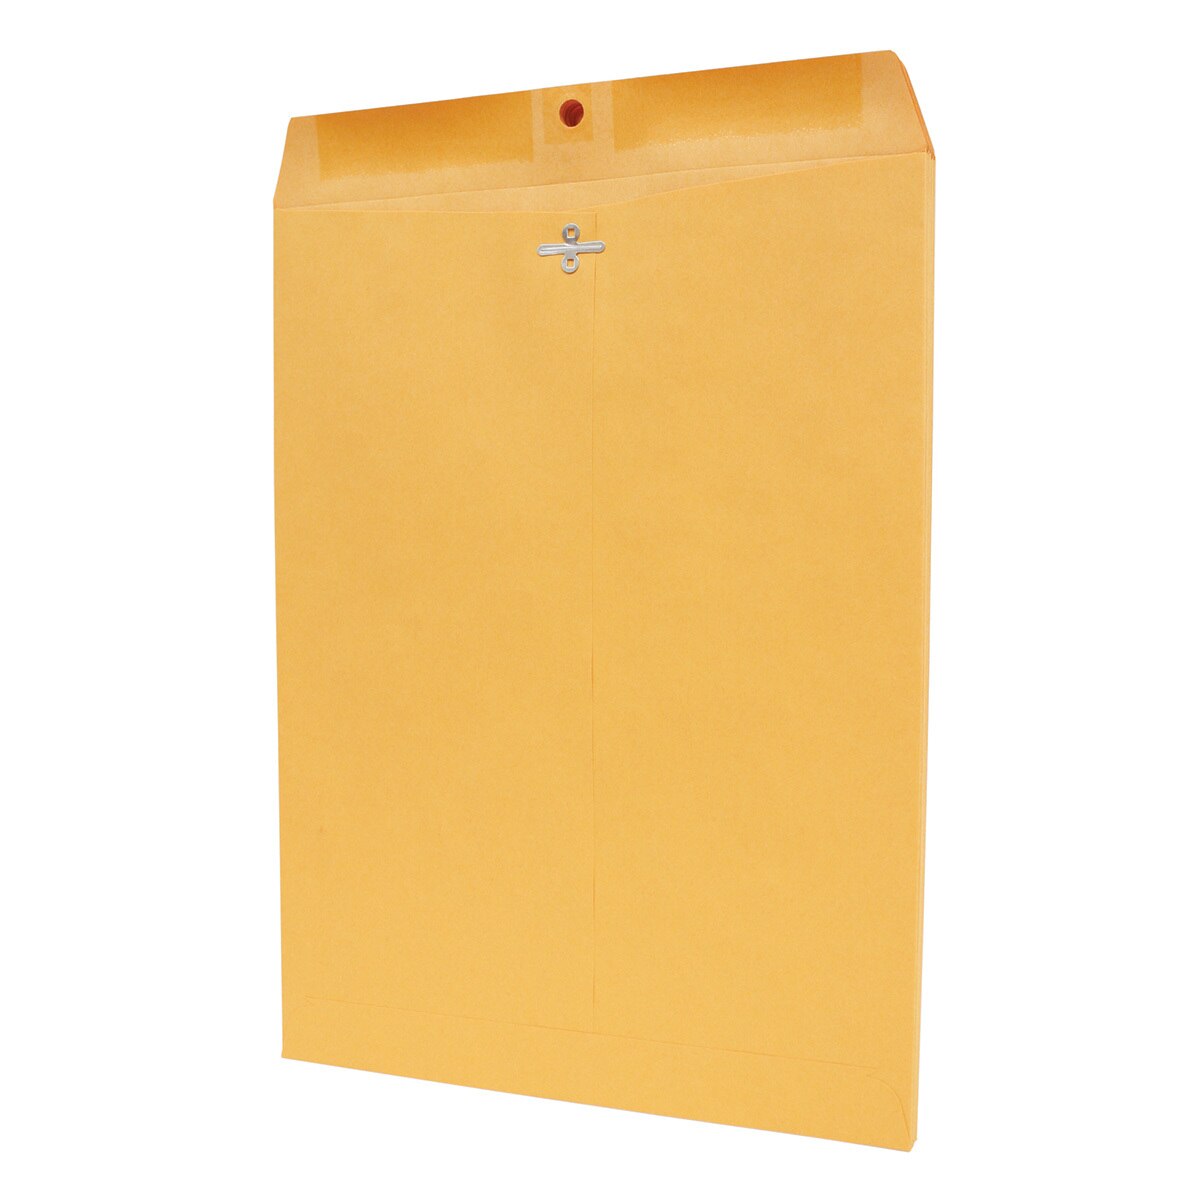 Ampad sobre tipo bolsa con broche tamaño carta amarillo